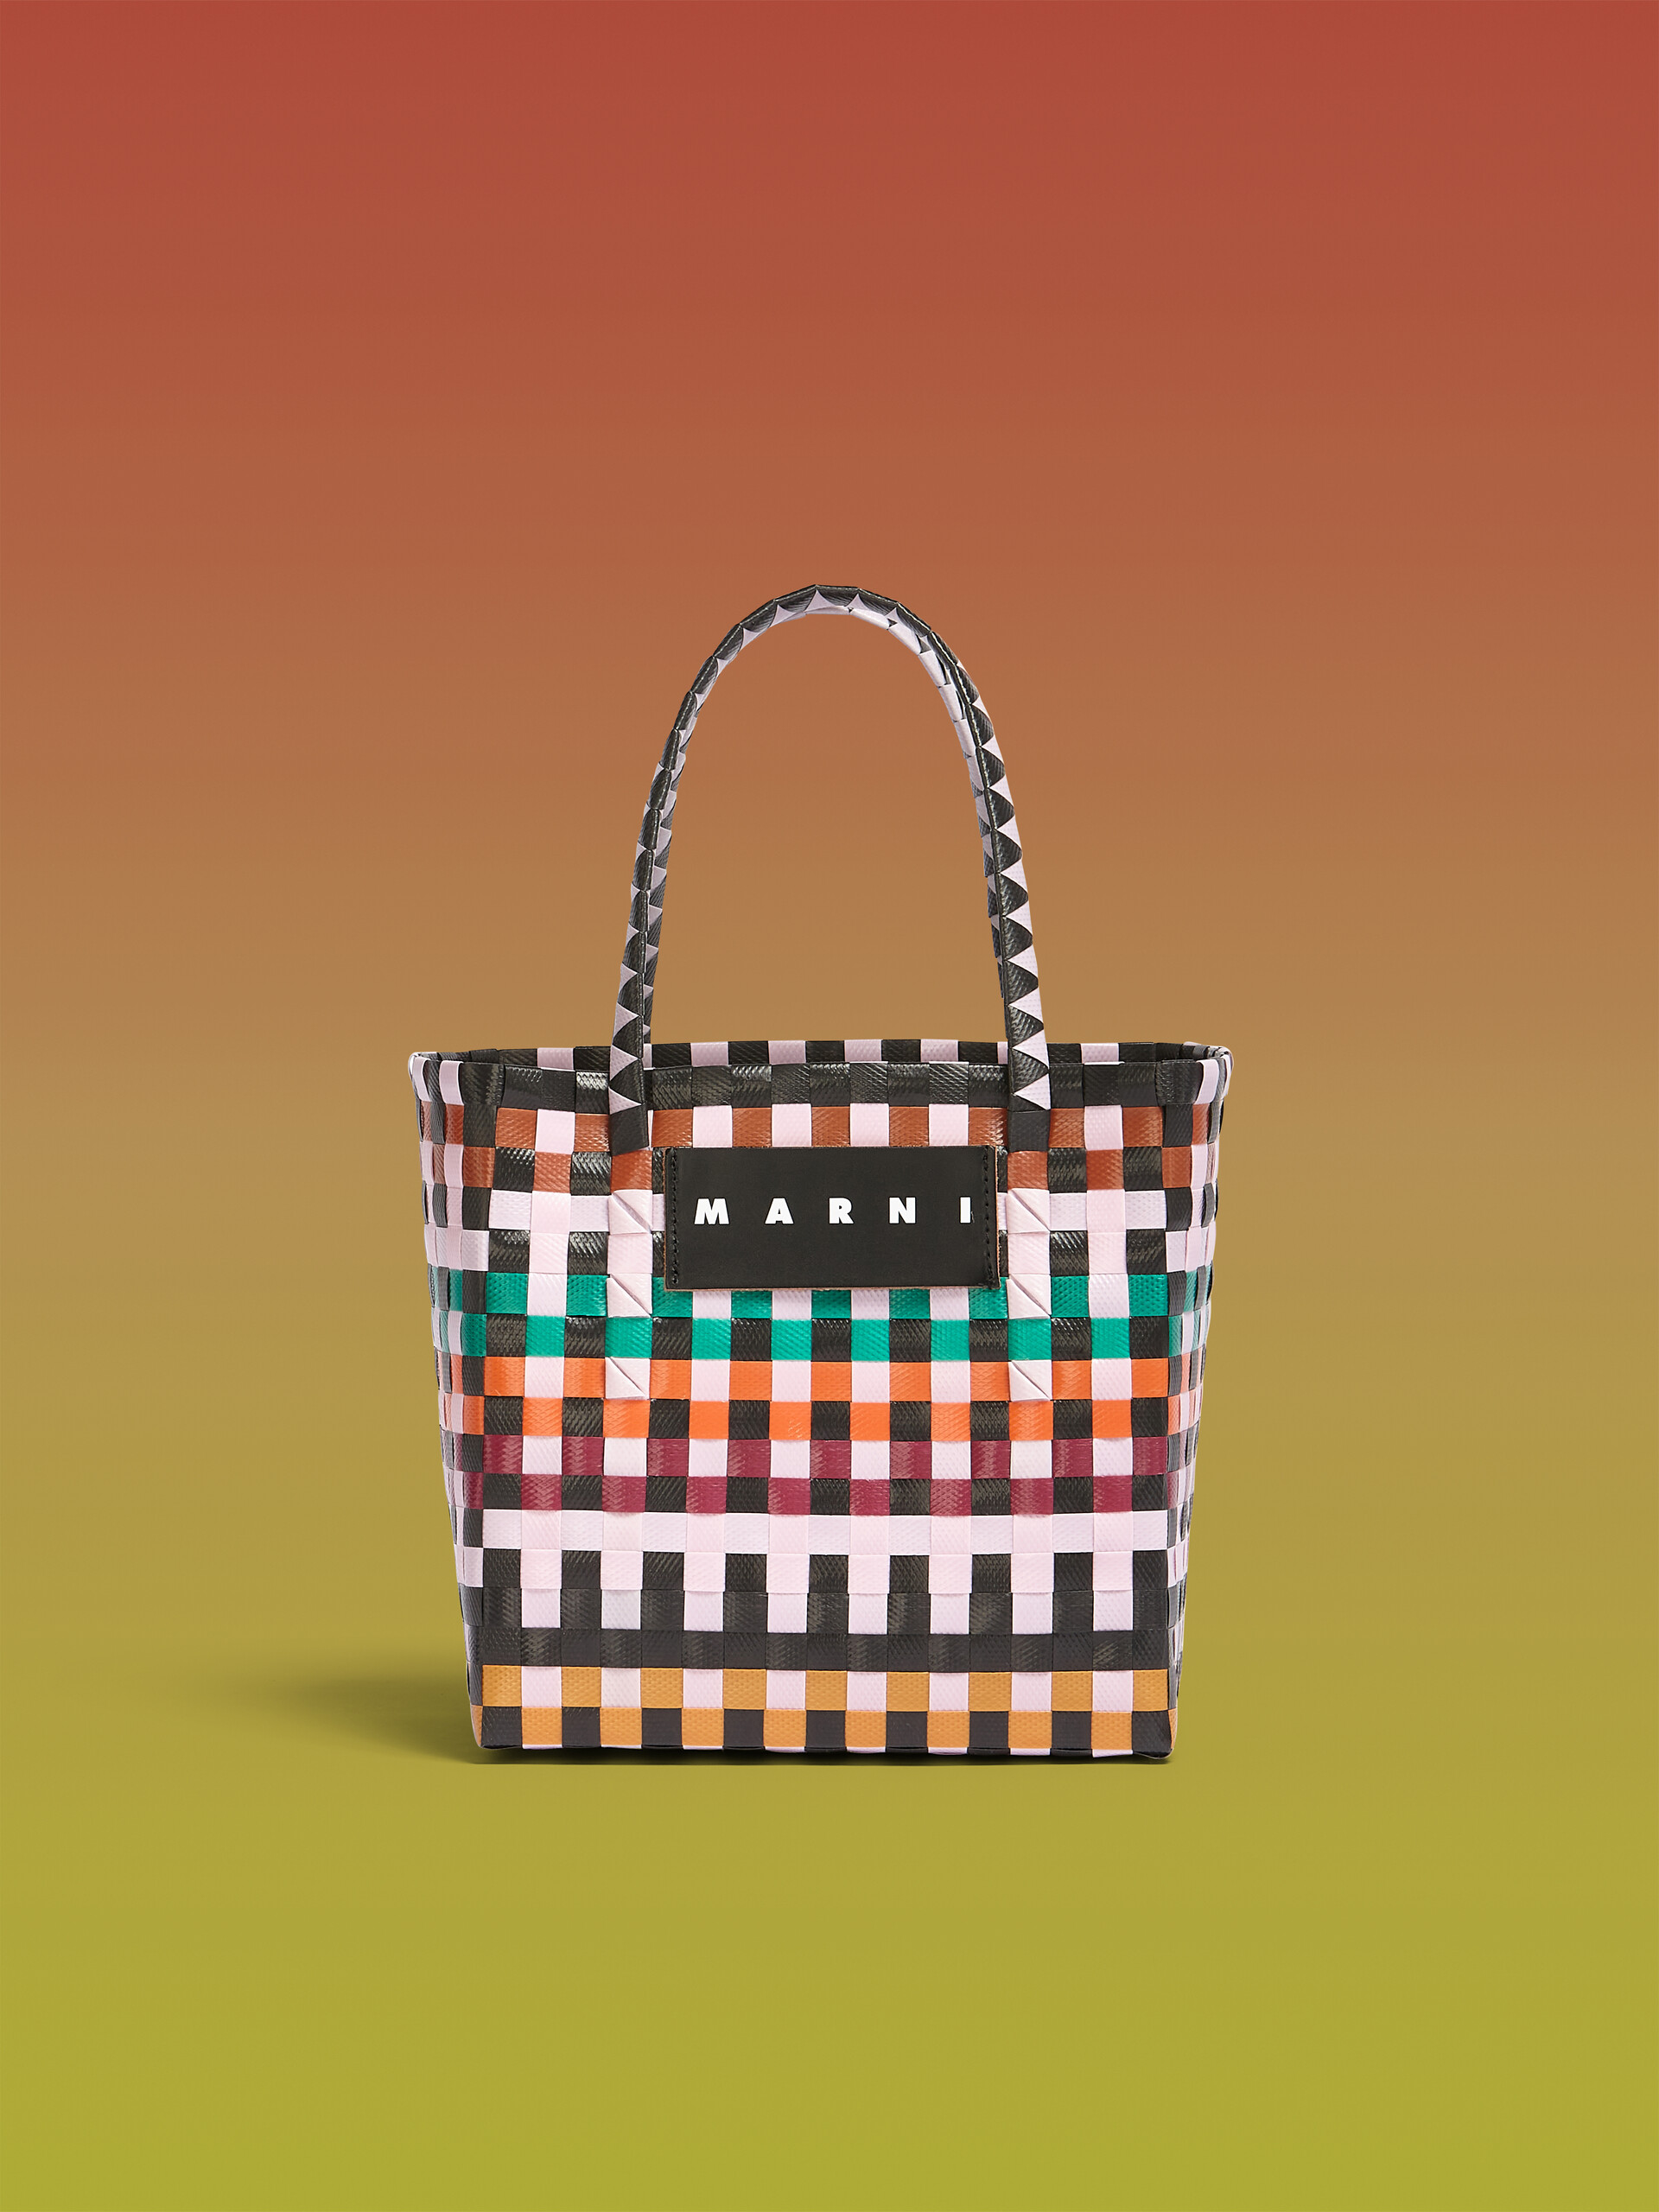 MARNI MARKET MINI BASKET bag in multicolor woven material - Shopping Bags - Image 1